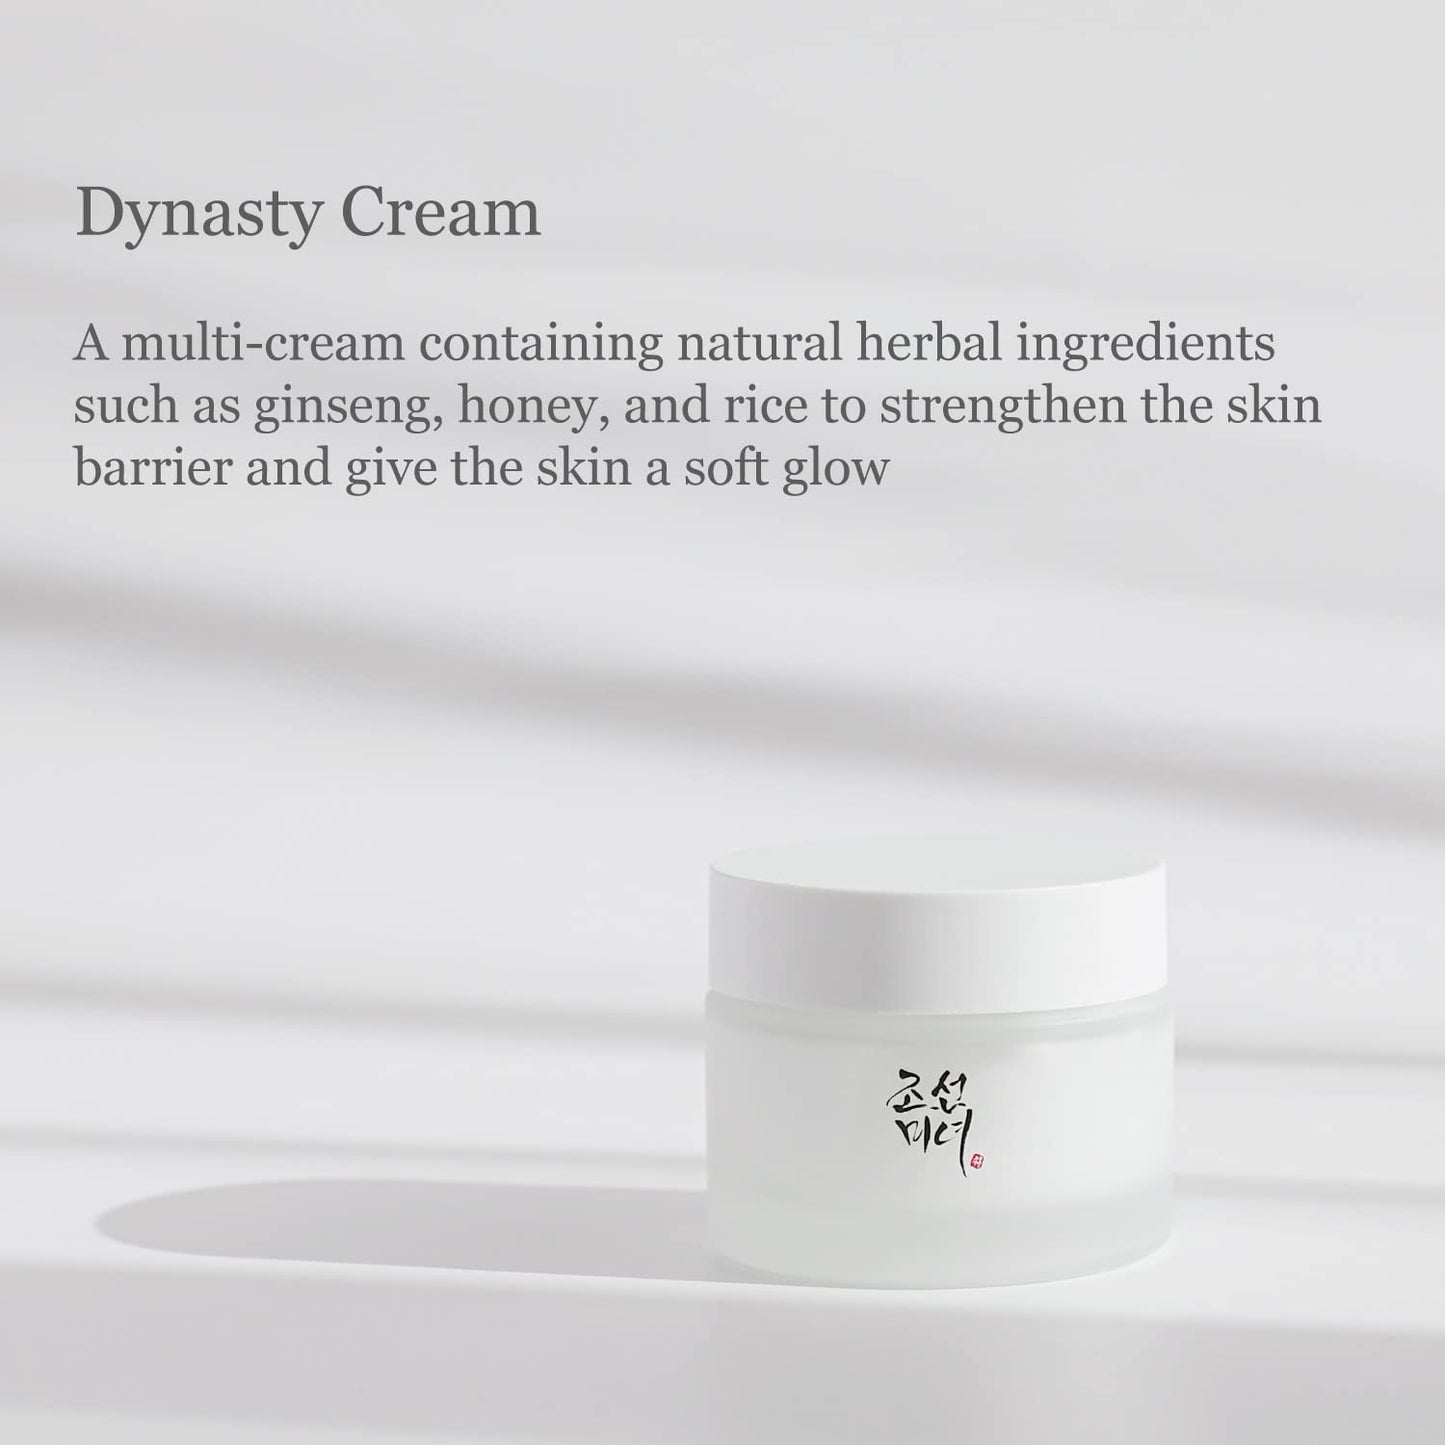 Dynasty cream by Beauty of Joseon